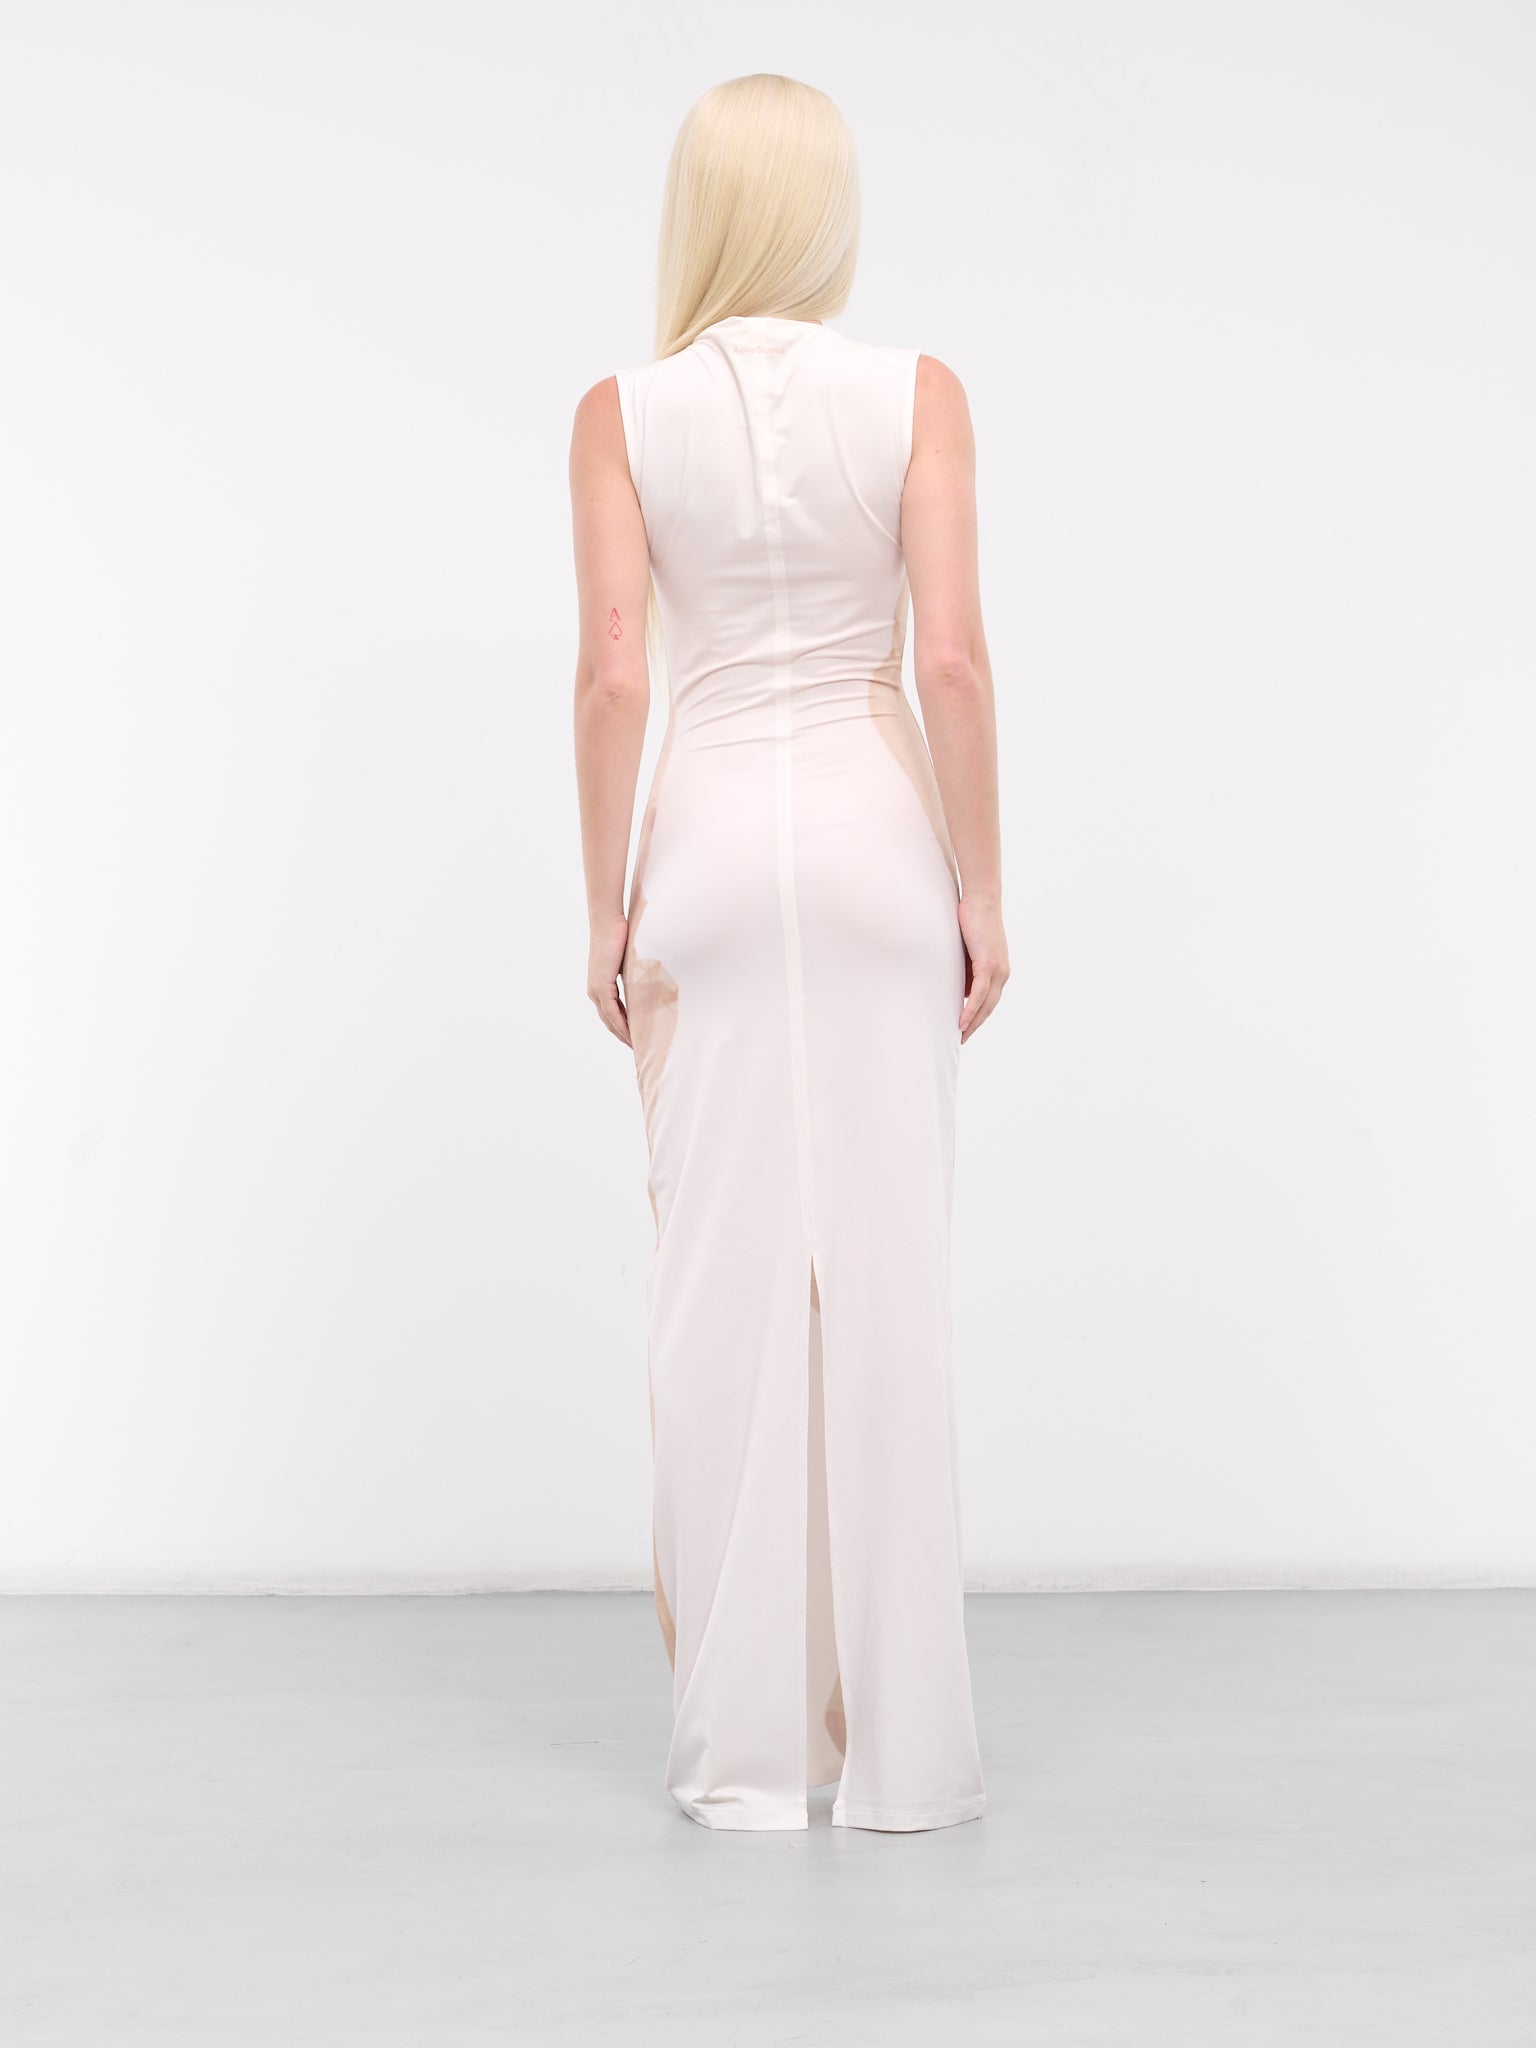 Printed Long Dress (A20667-WHITE-BEIGE)